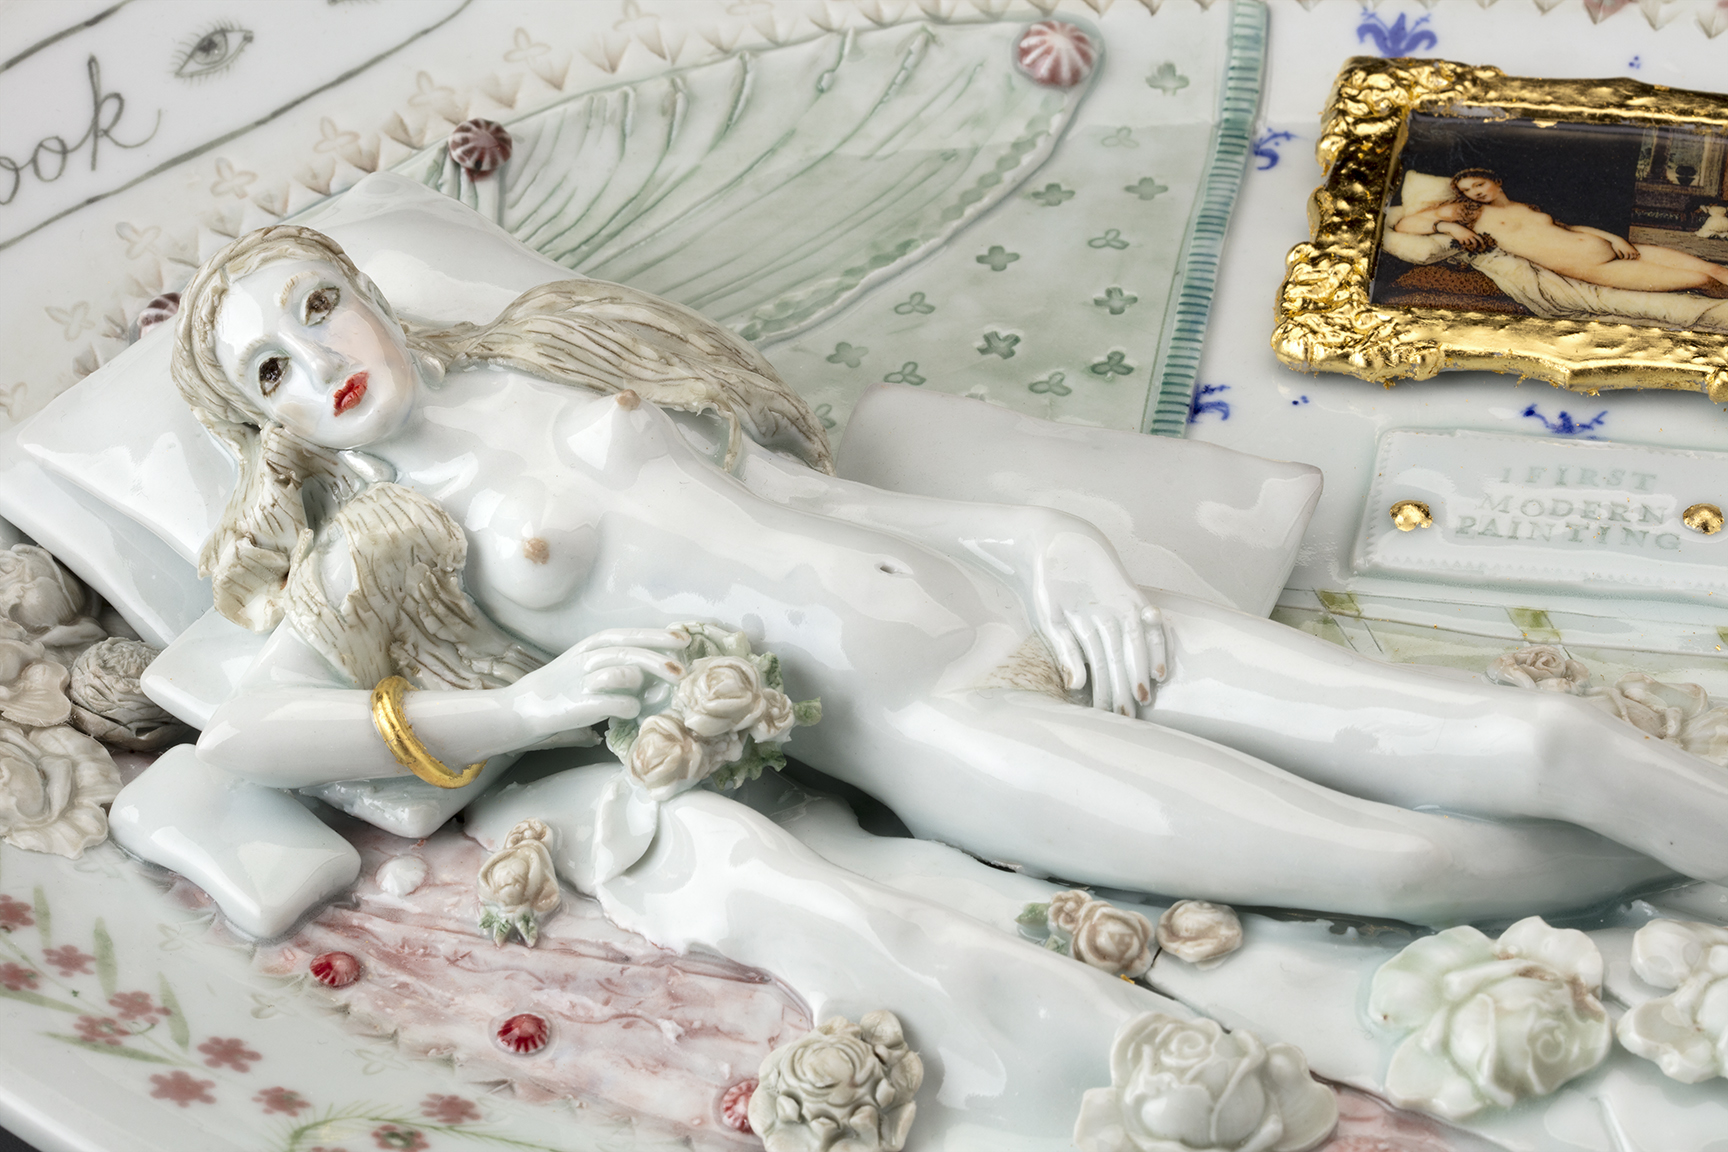 Mara Superior, "Venus of Urbino", 2018, detail.